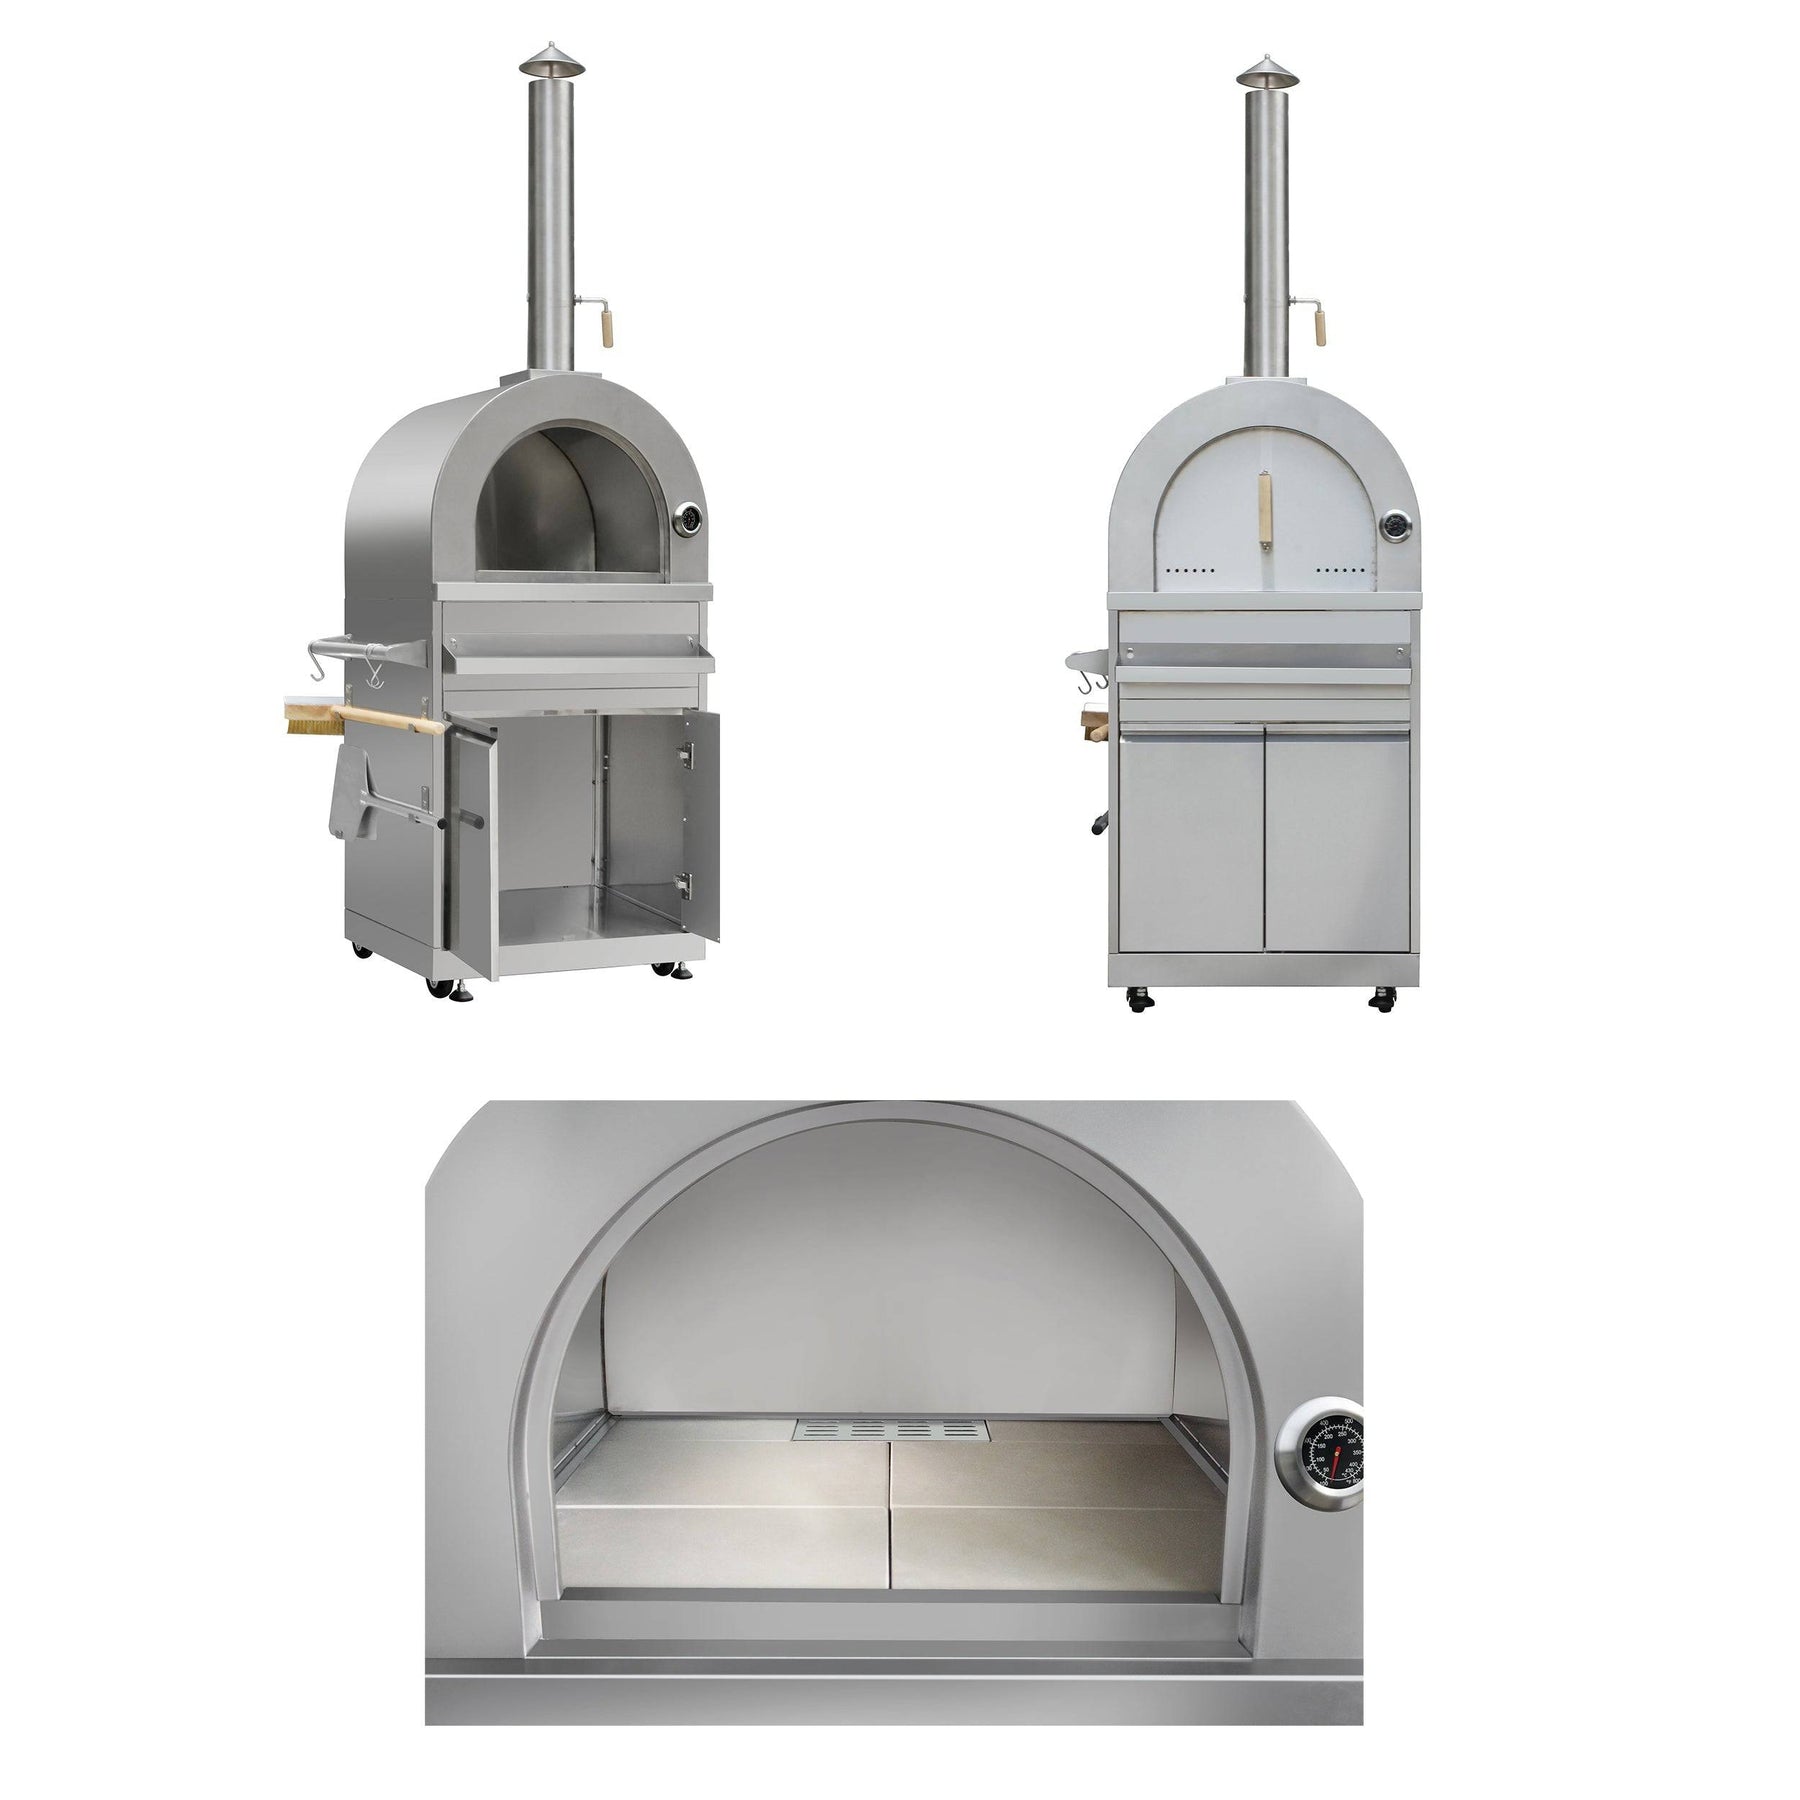 Fobest 7 Piece Modular Stainless Steel Outdoor Kitchen Suite with Under Counter Refrigerator Drawer - Outdoor Kitchen Suite-Fobest Appliance